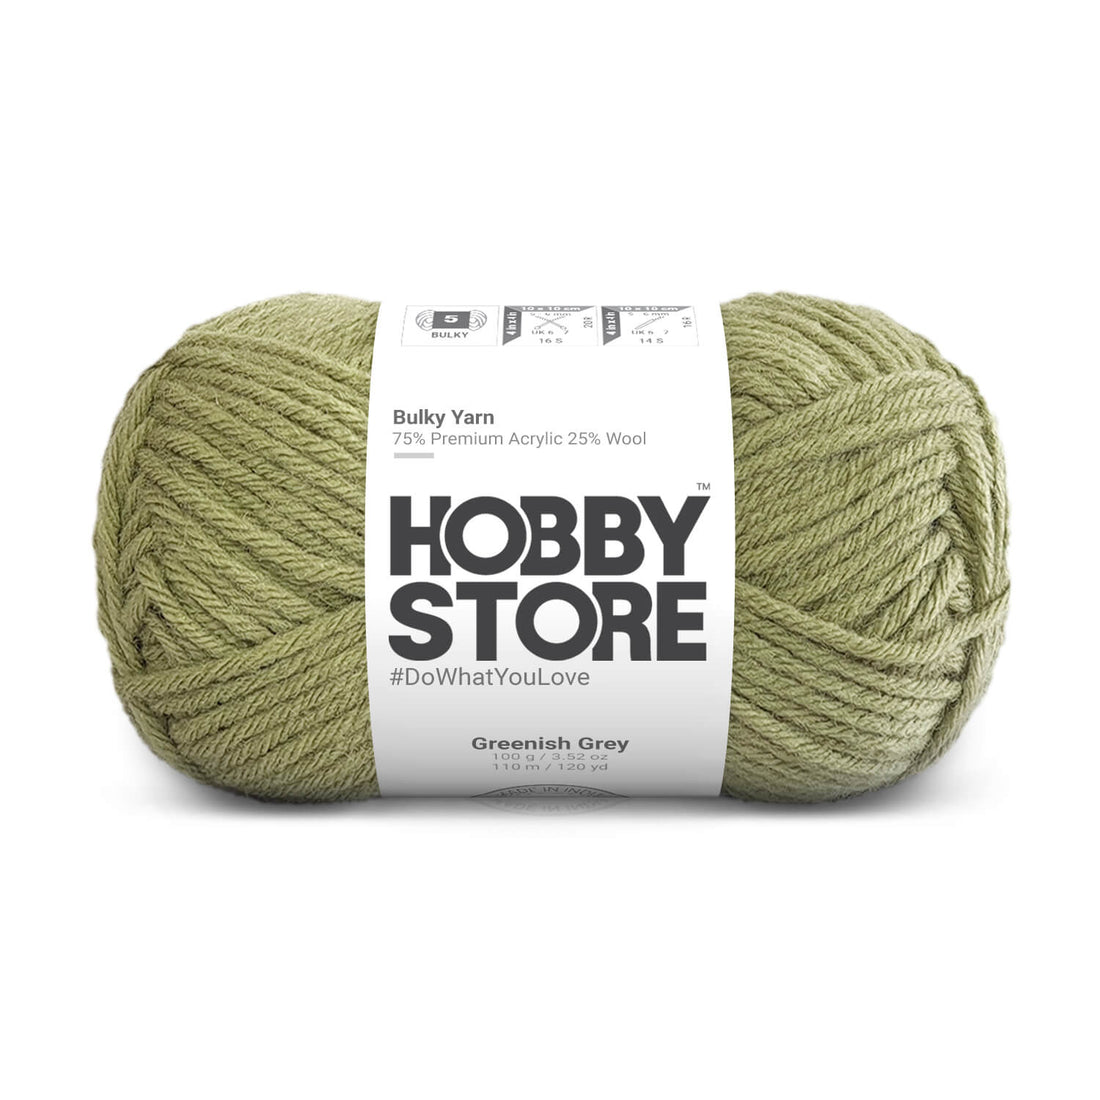 Bulky Yarn by Hobby Store - Greenish Grey 6010